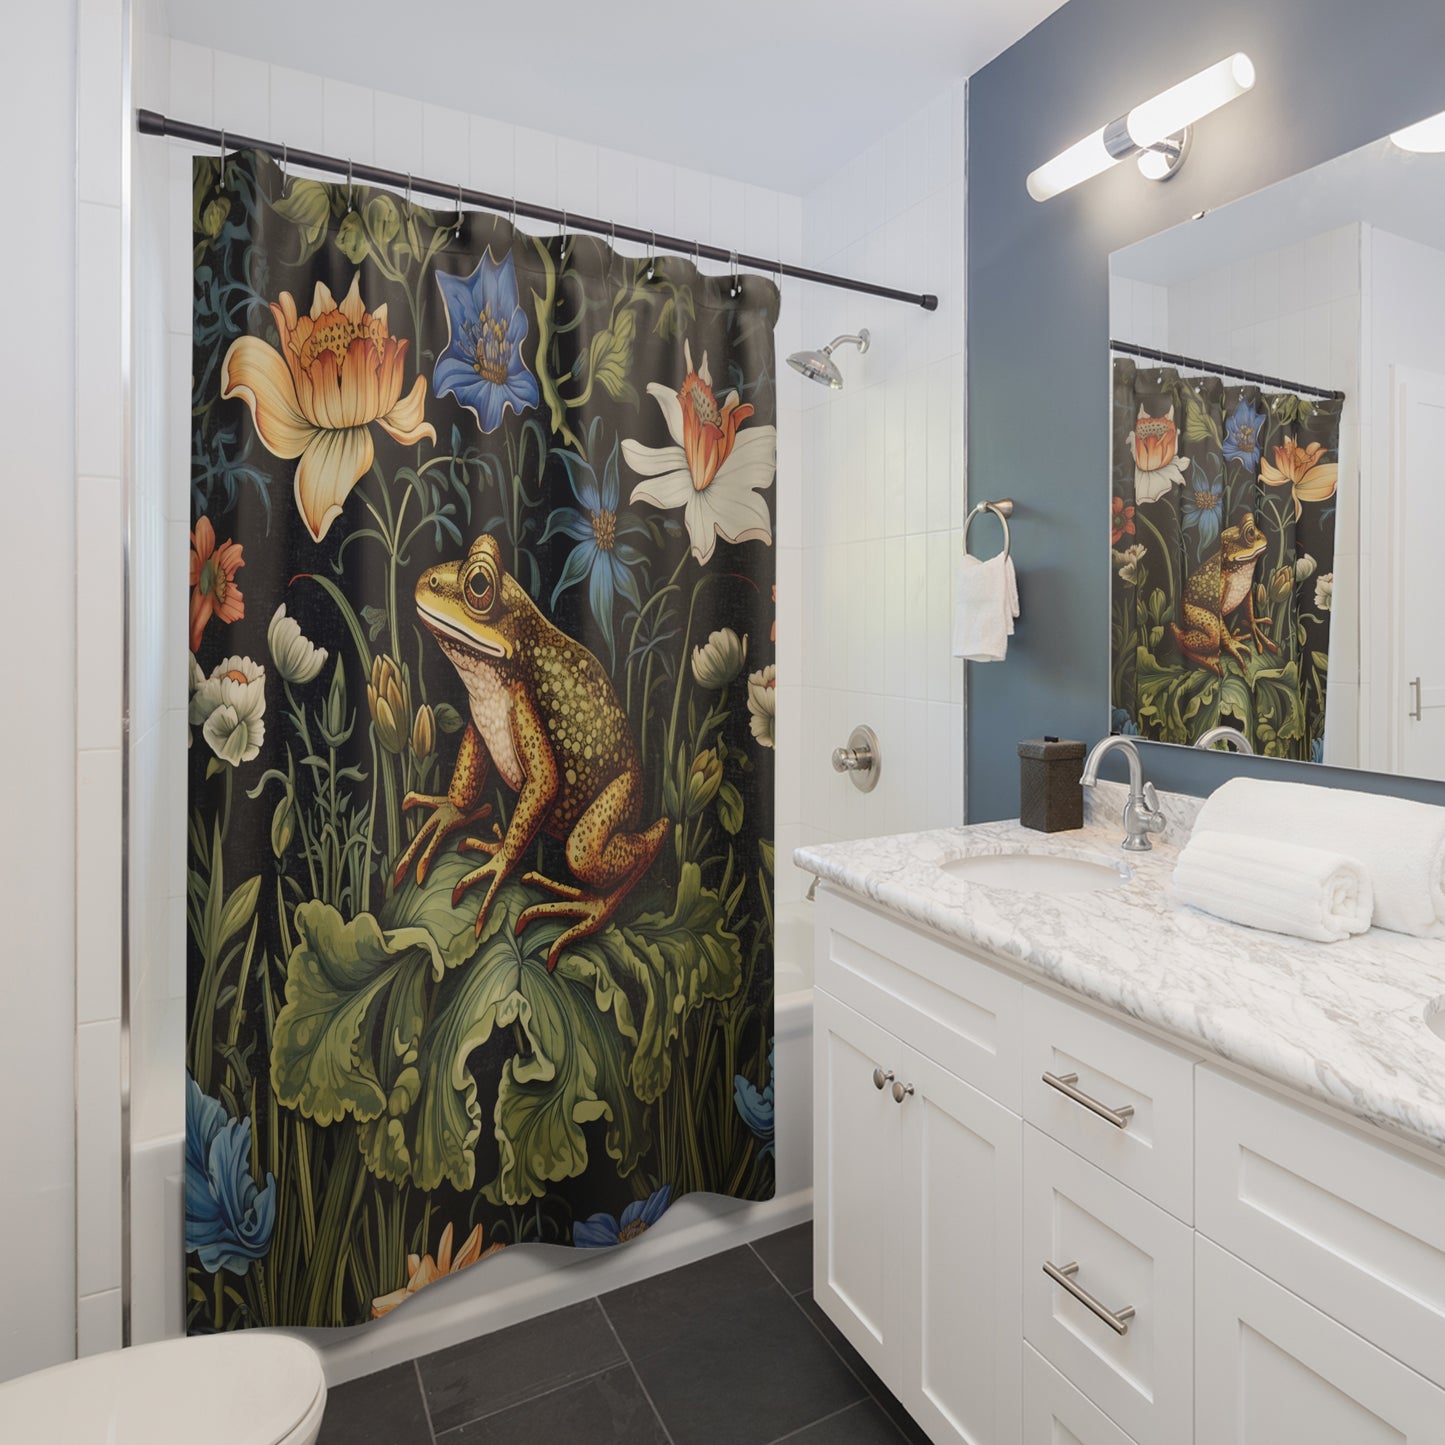 Frog in Garden Pond Shower Curtain, William Morris Inspired, Farmhouse Bathroom, Floral Shower Curtain, 71" x 74"